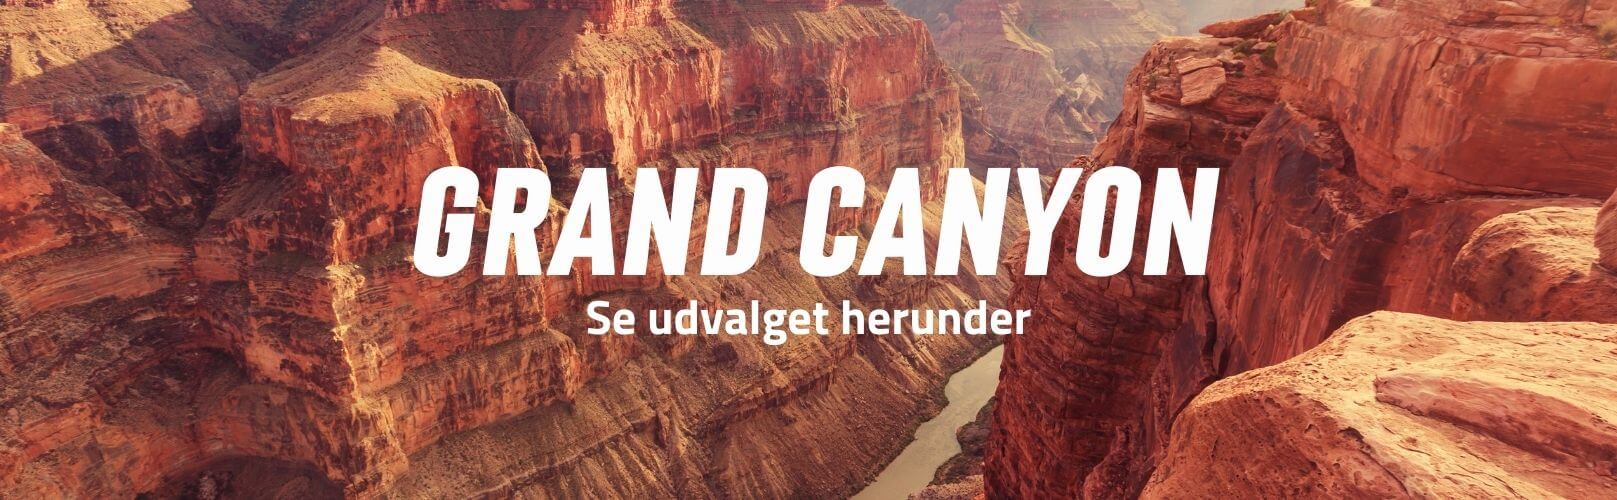 Grand Canyon brand banner